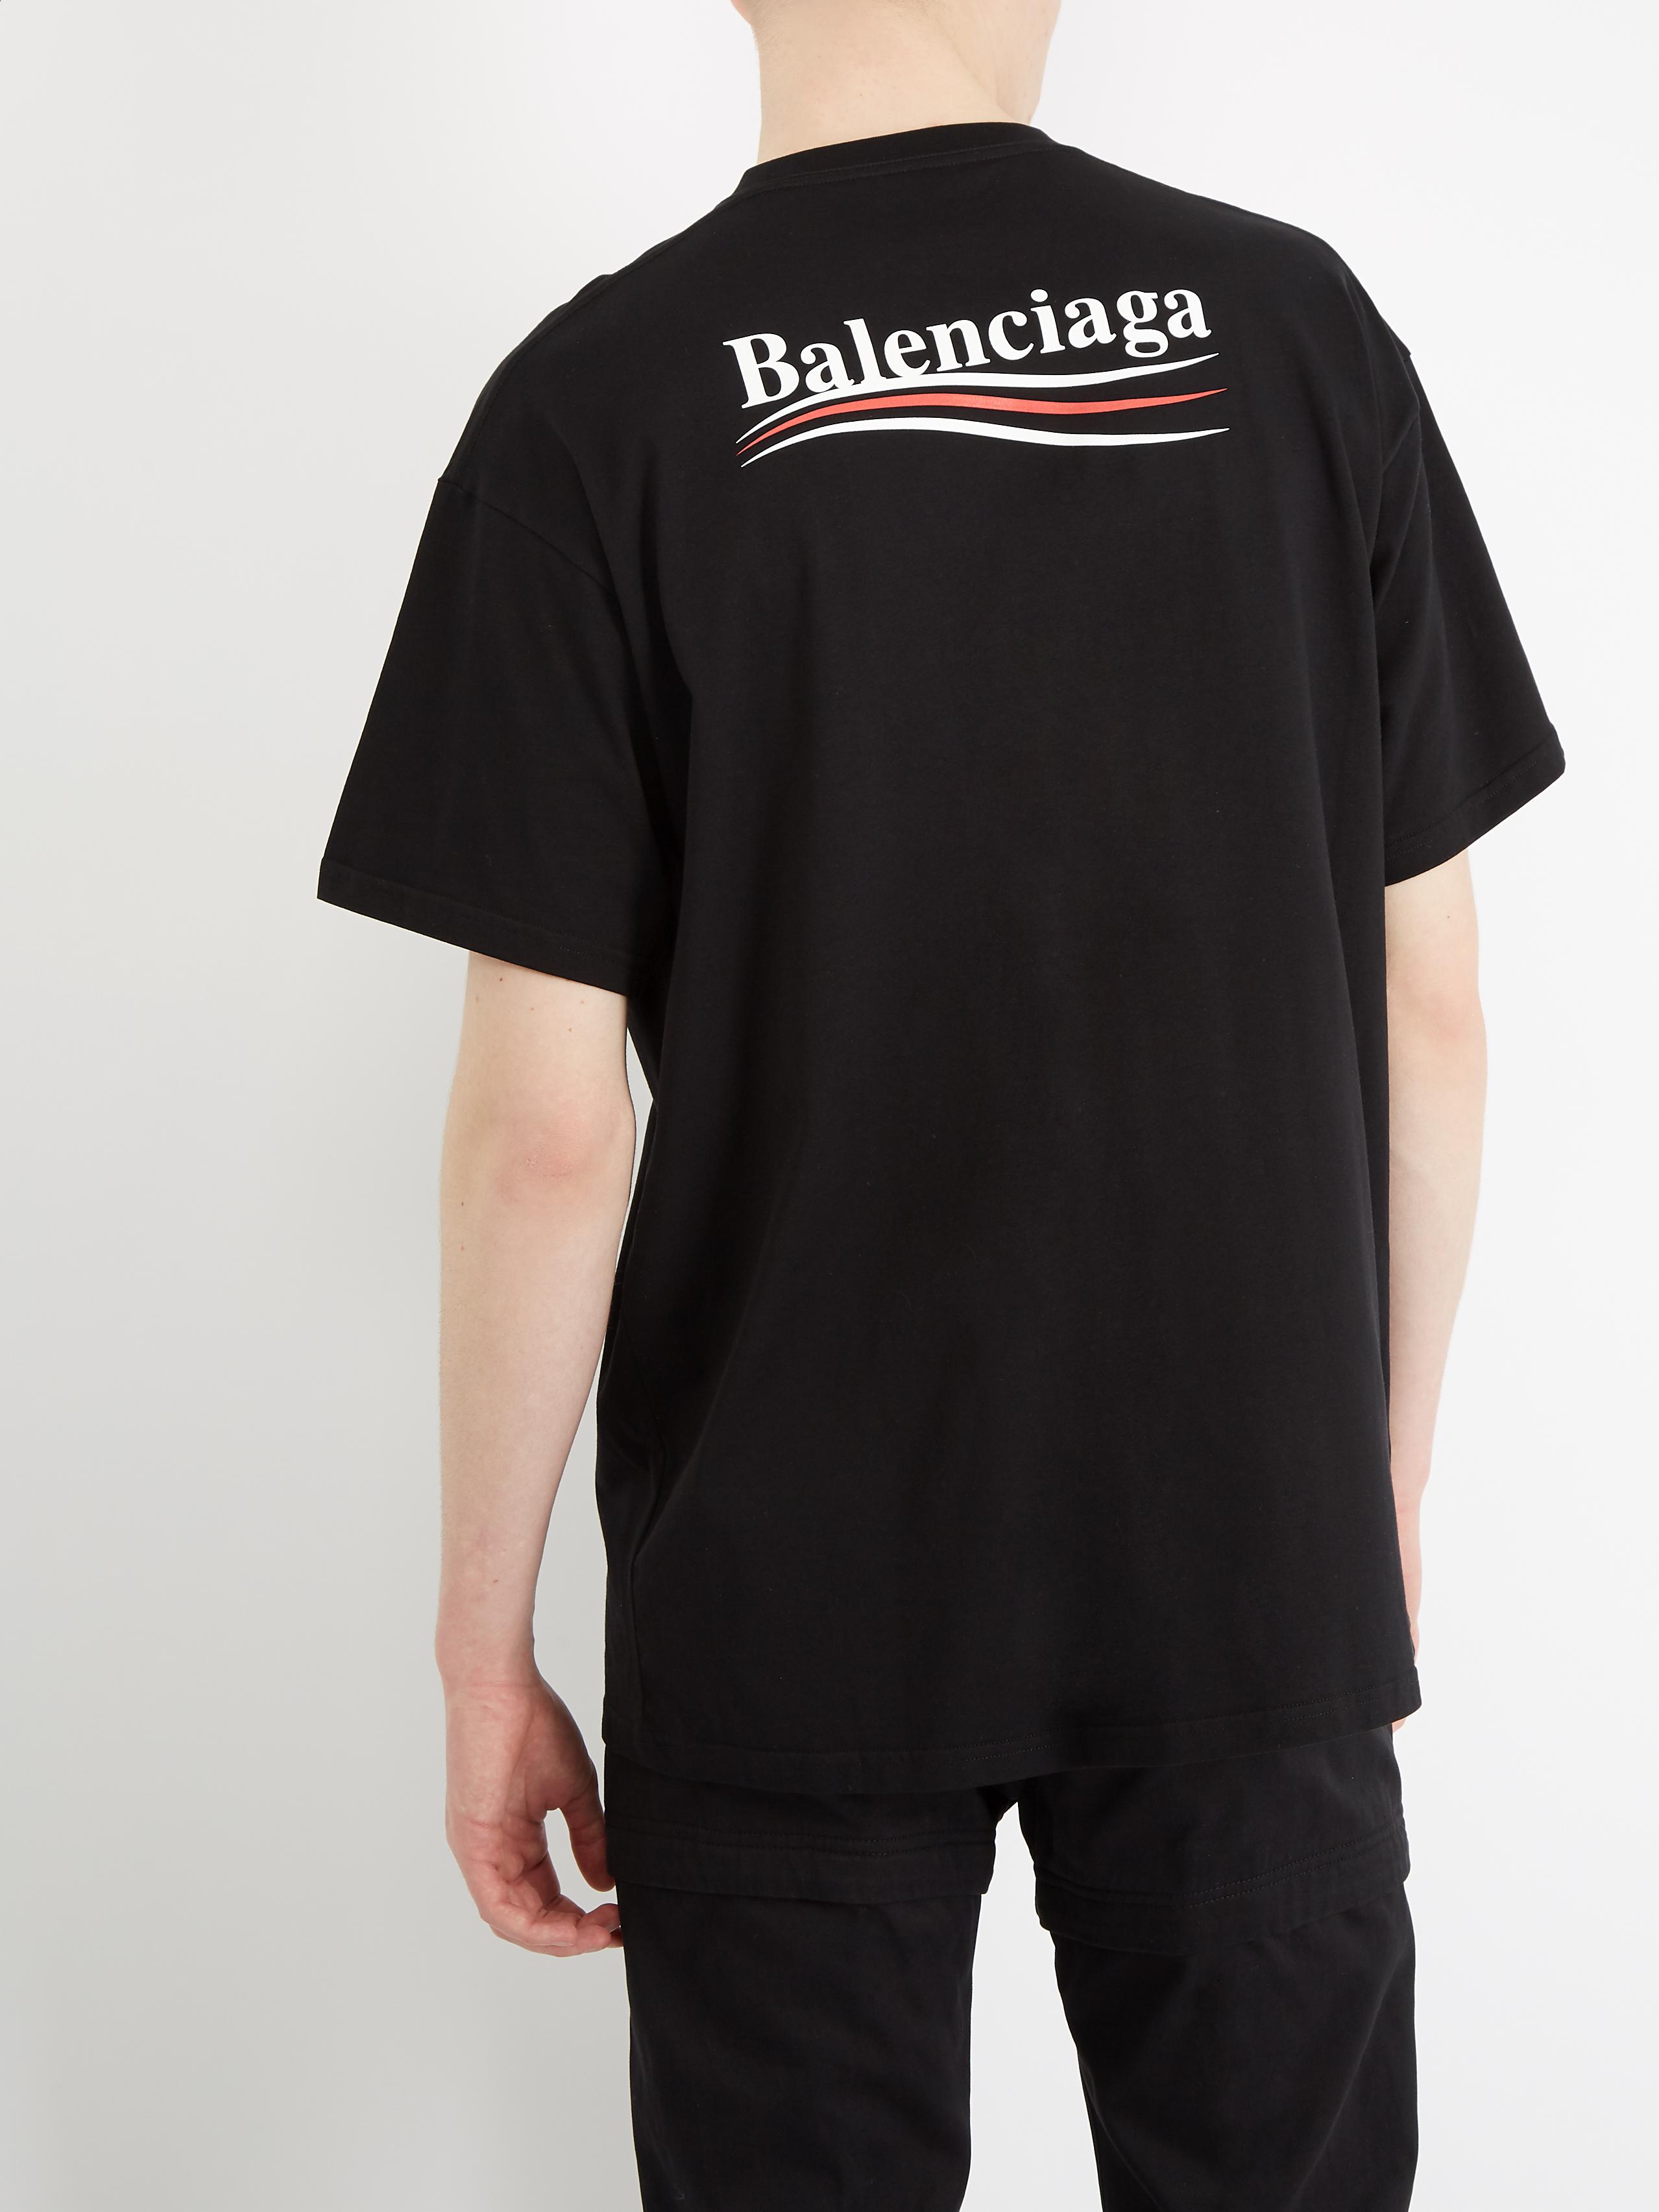 Balen-ciaga-Printed-Cotton-jersey-T-shirt-Black